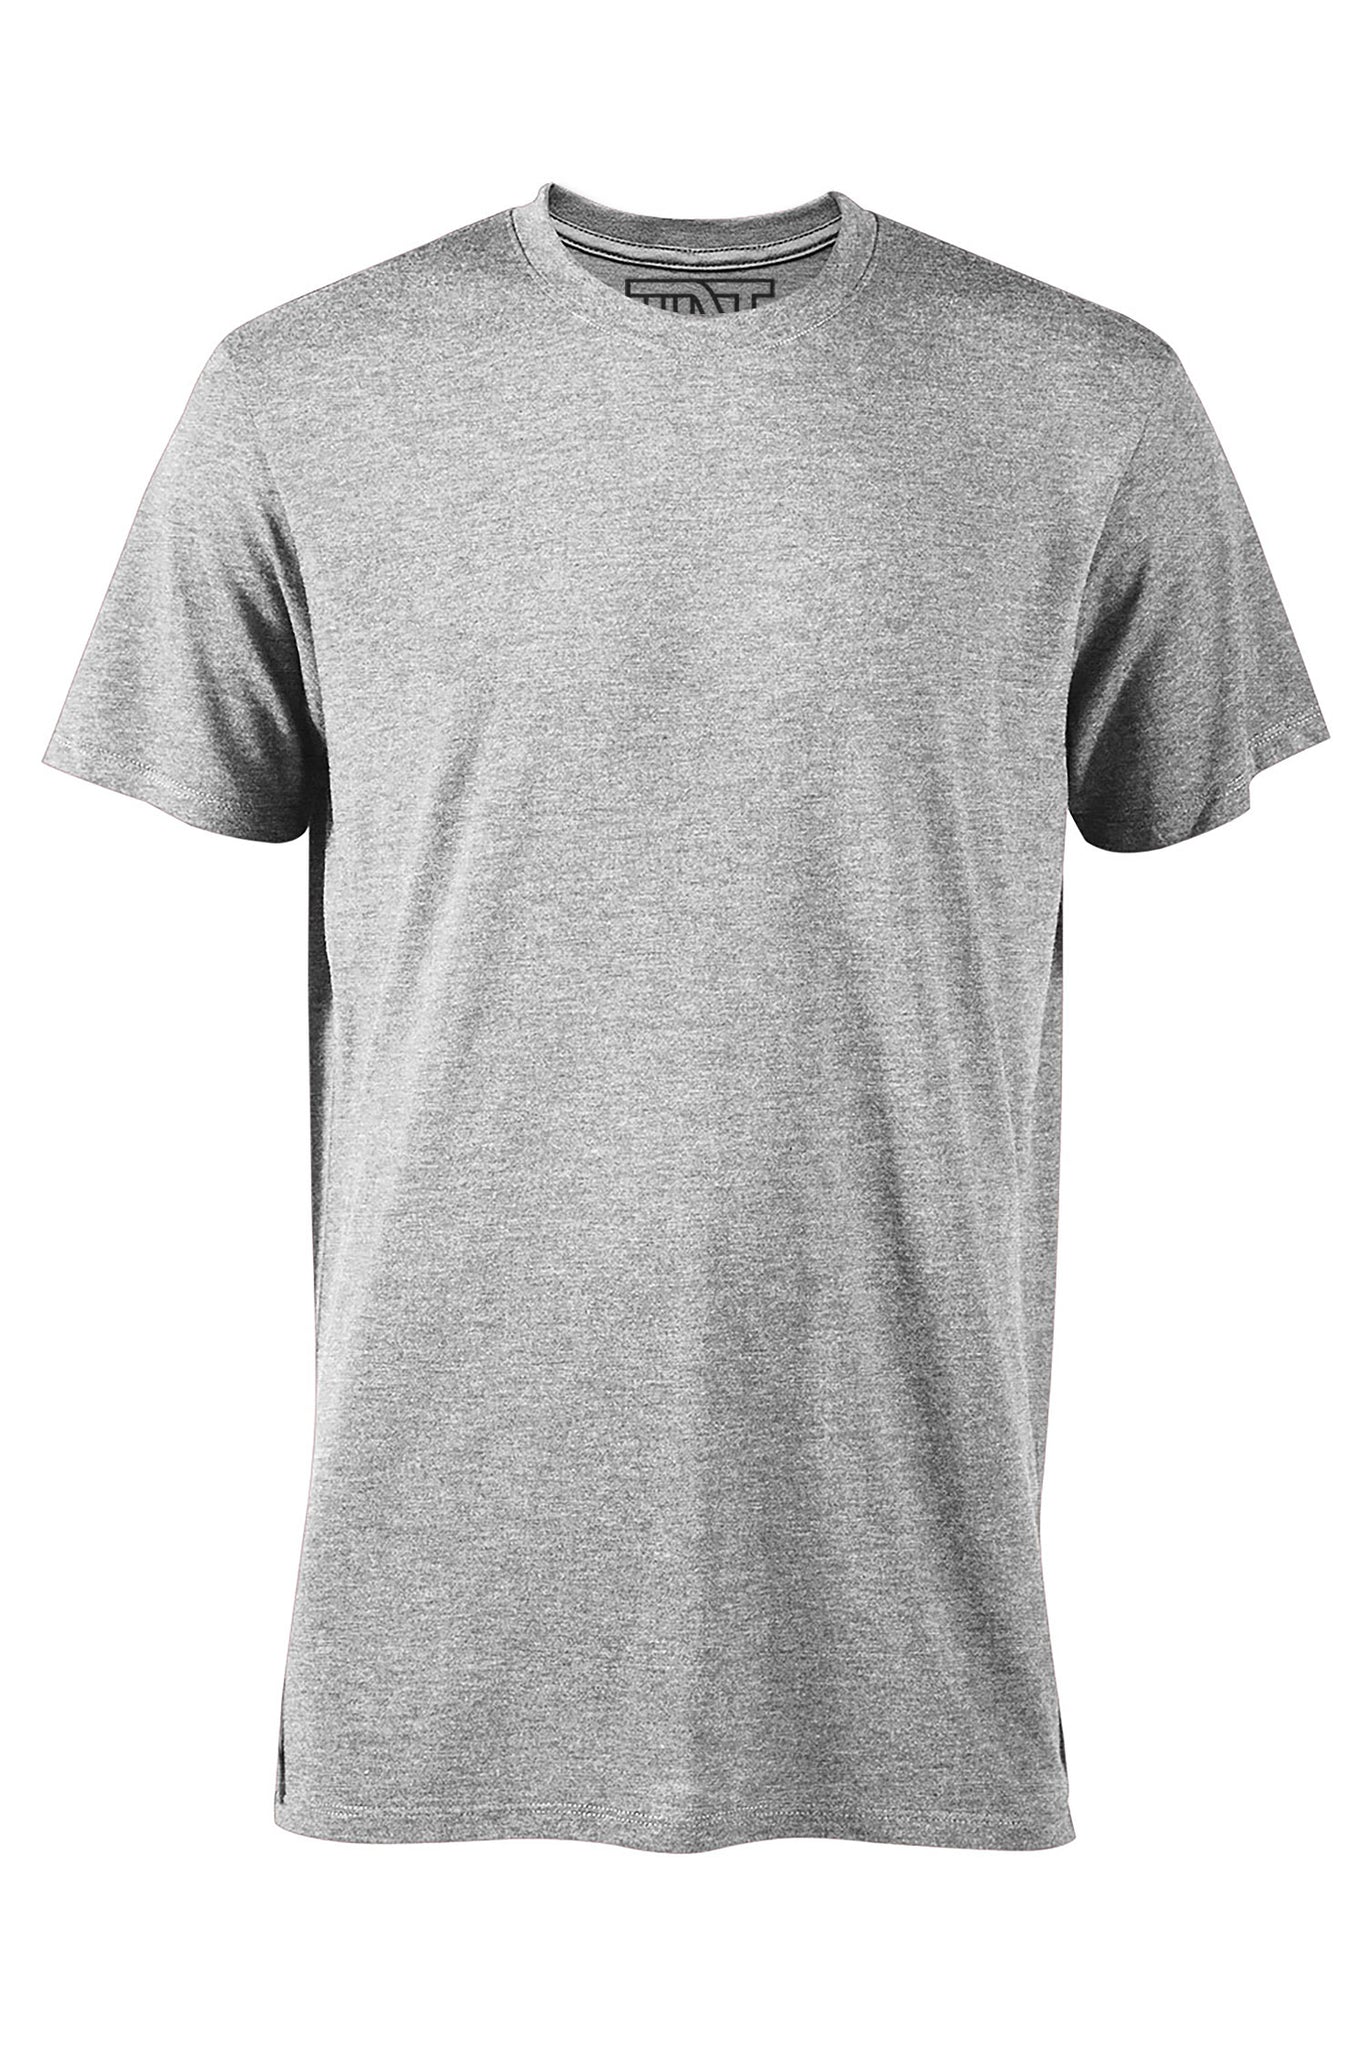 TNT Athletic Heather Short Sleeve T-Shirt - Gray X-Large